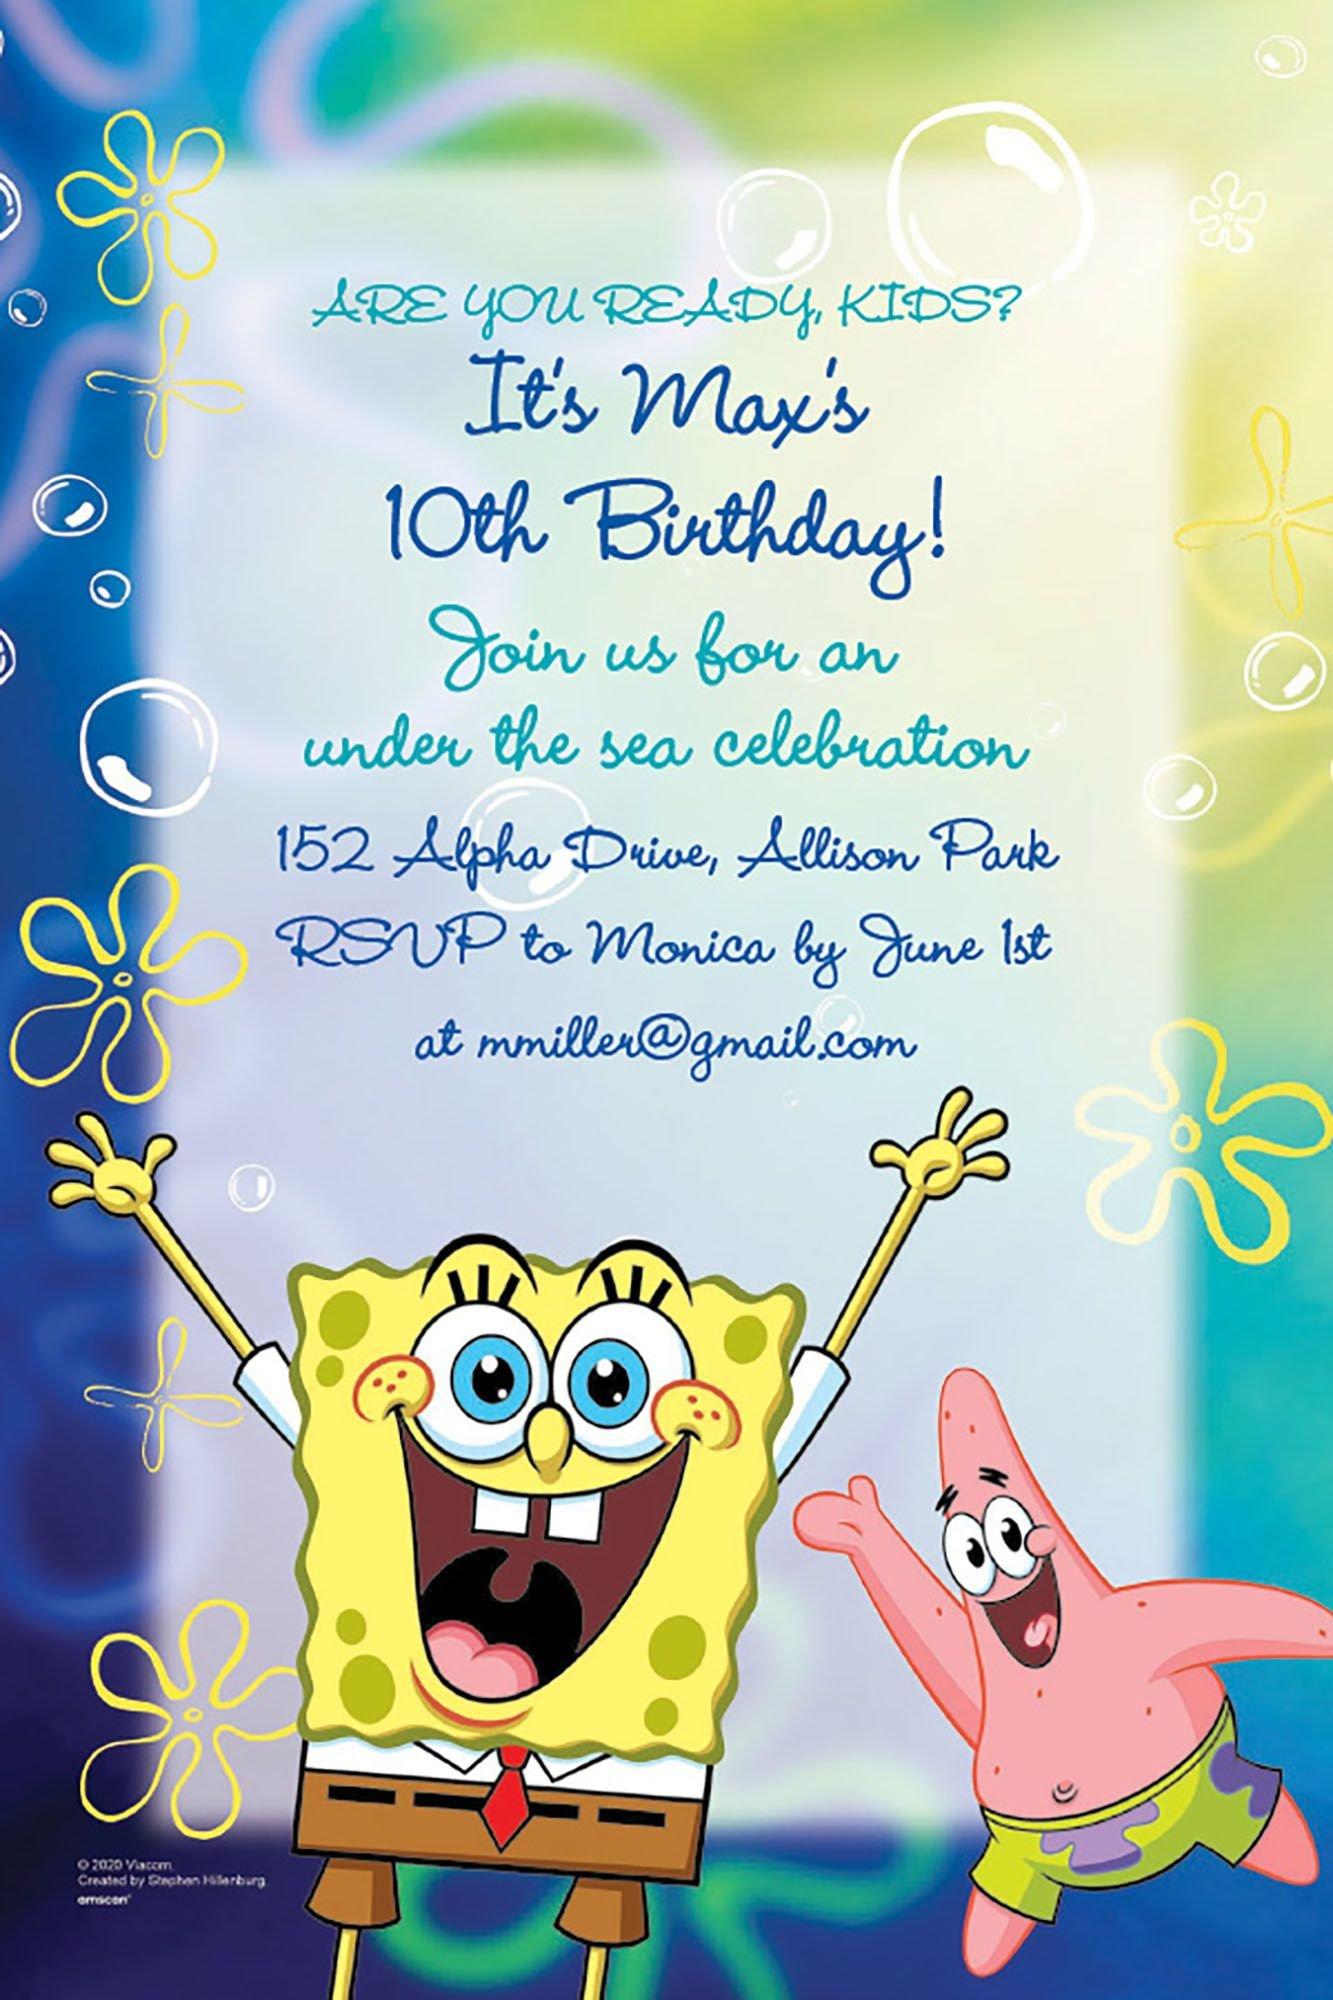 Spongebob squarepants 2nd birthday Birthday Party Ideas, Photo 1 of 16